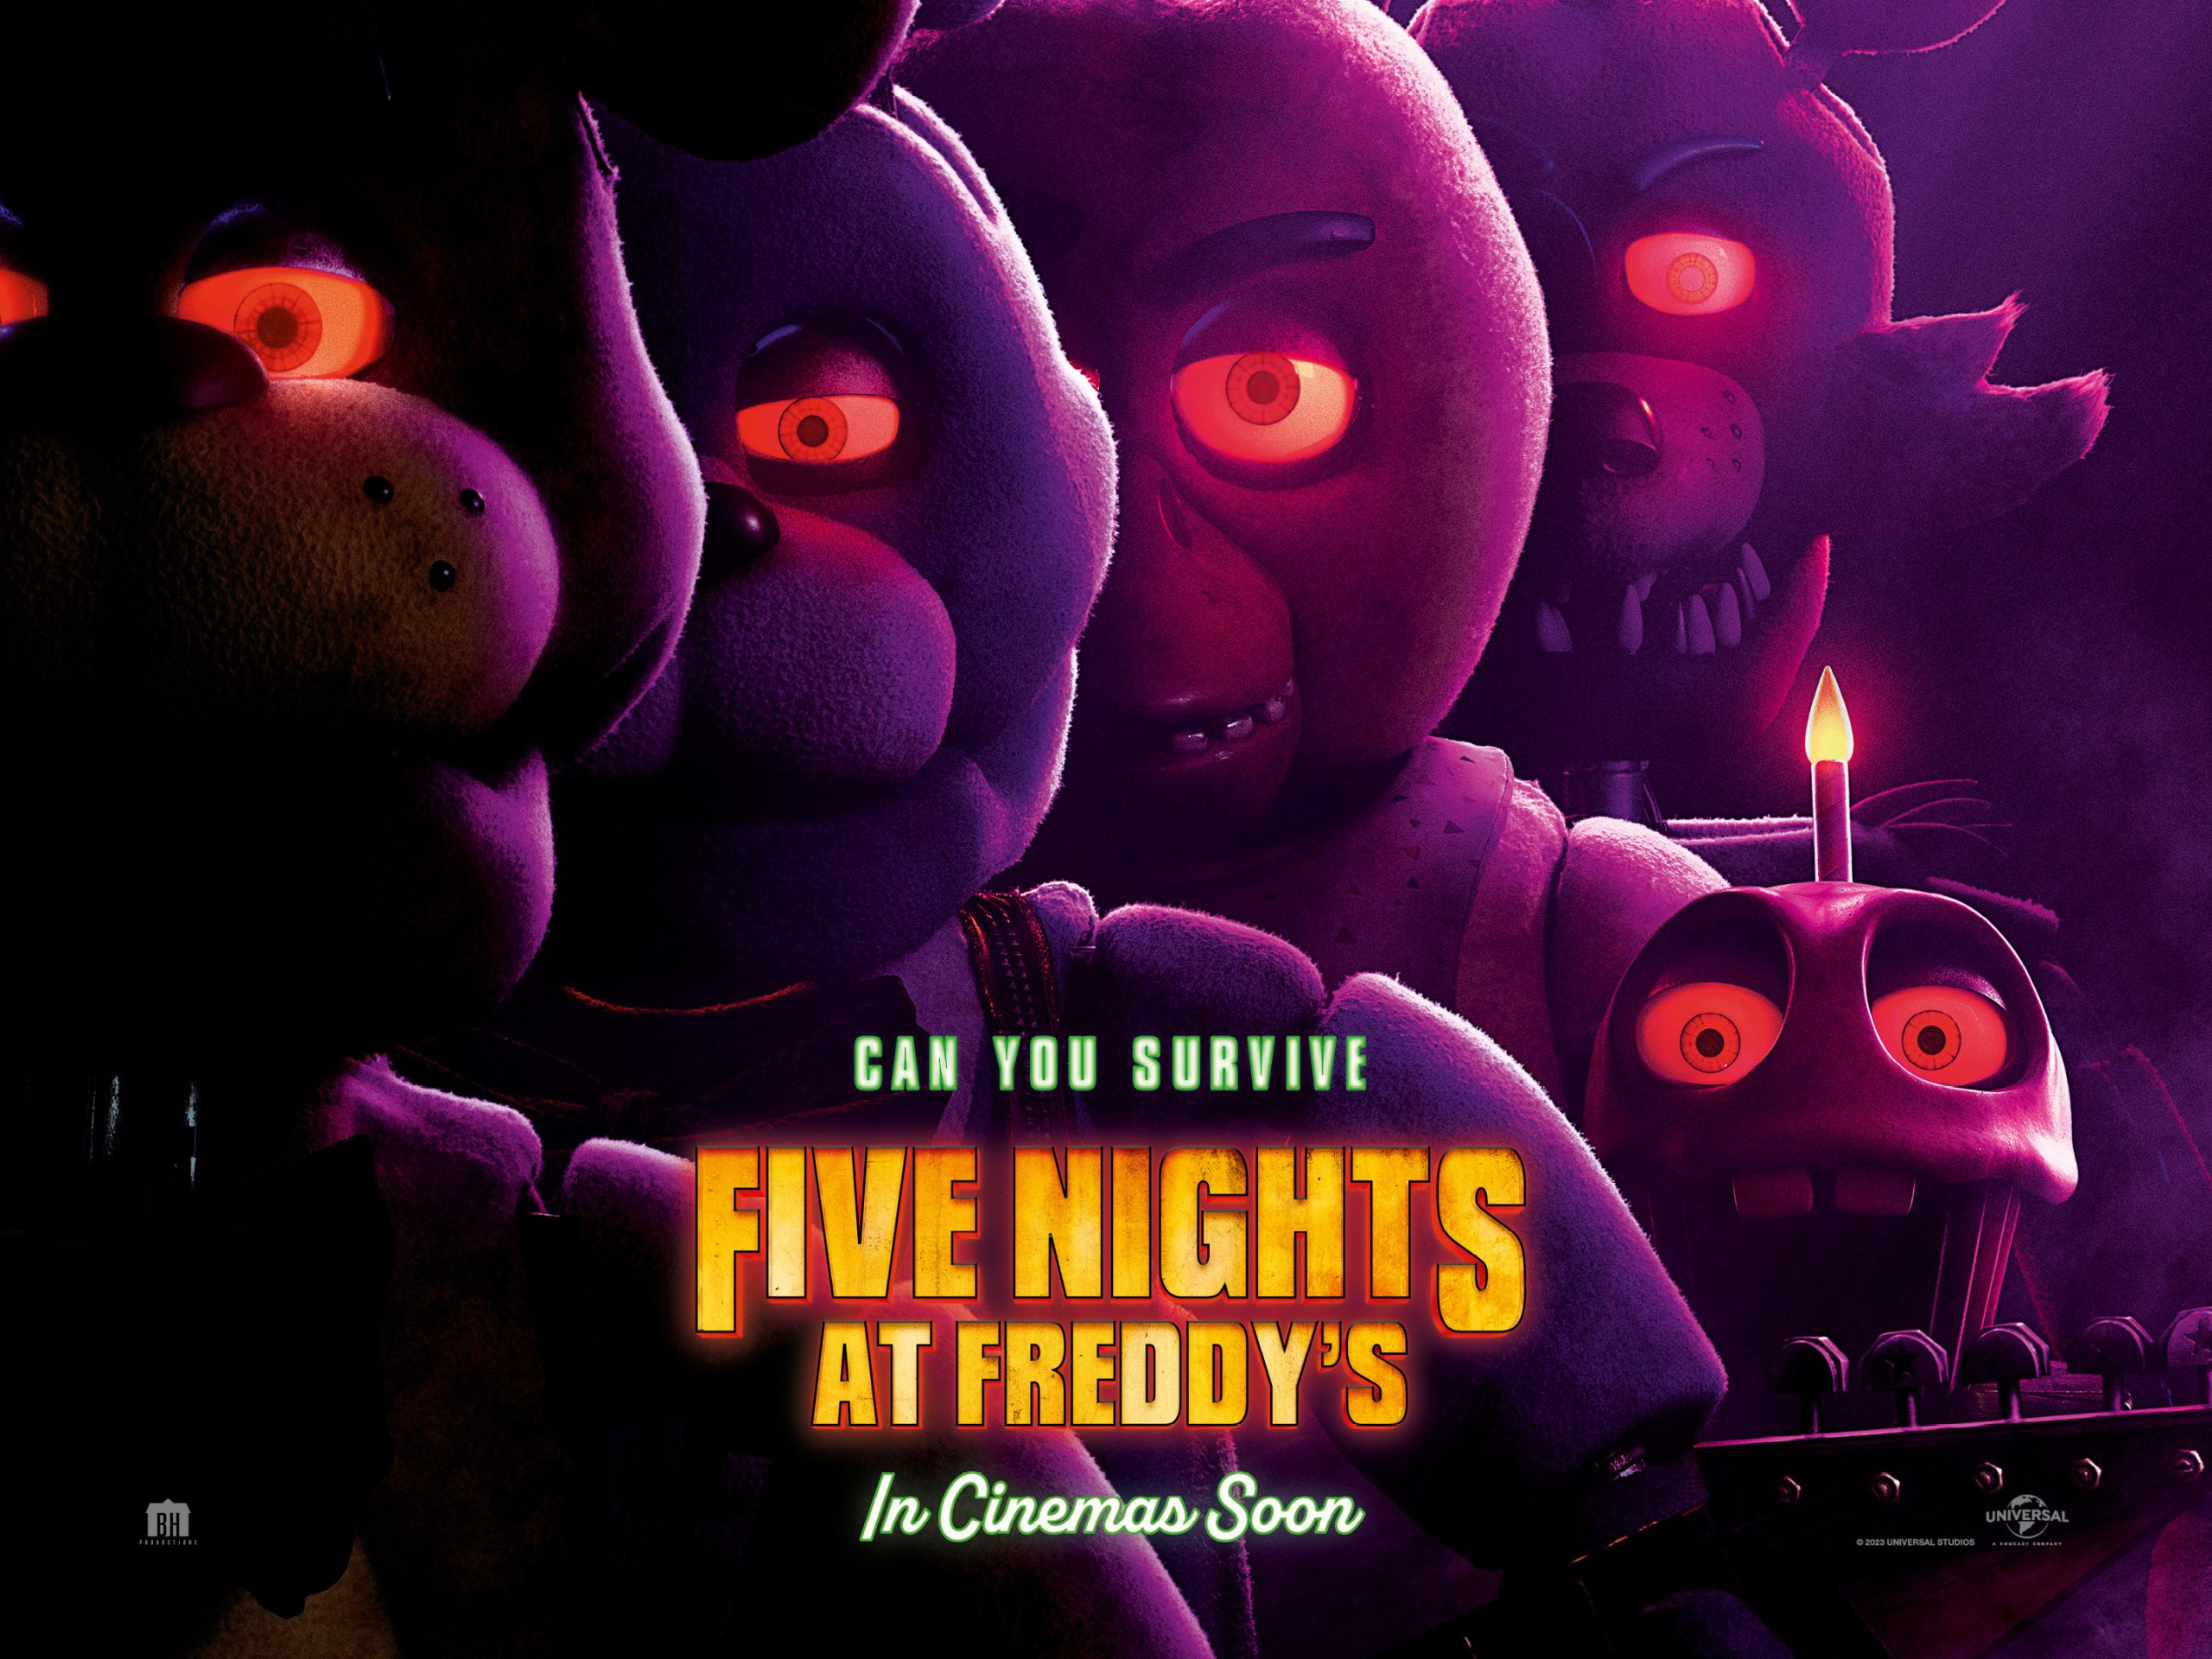 Five Nights at Freddy's 3 Looks Freakin' Terrifying